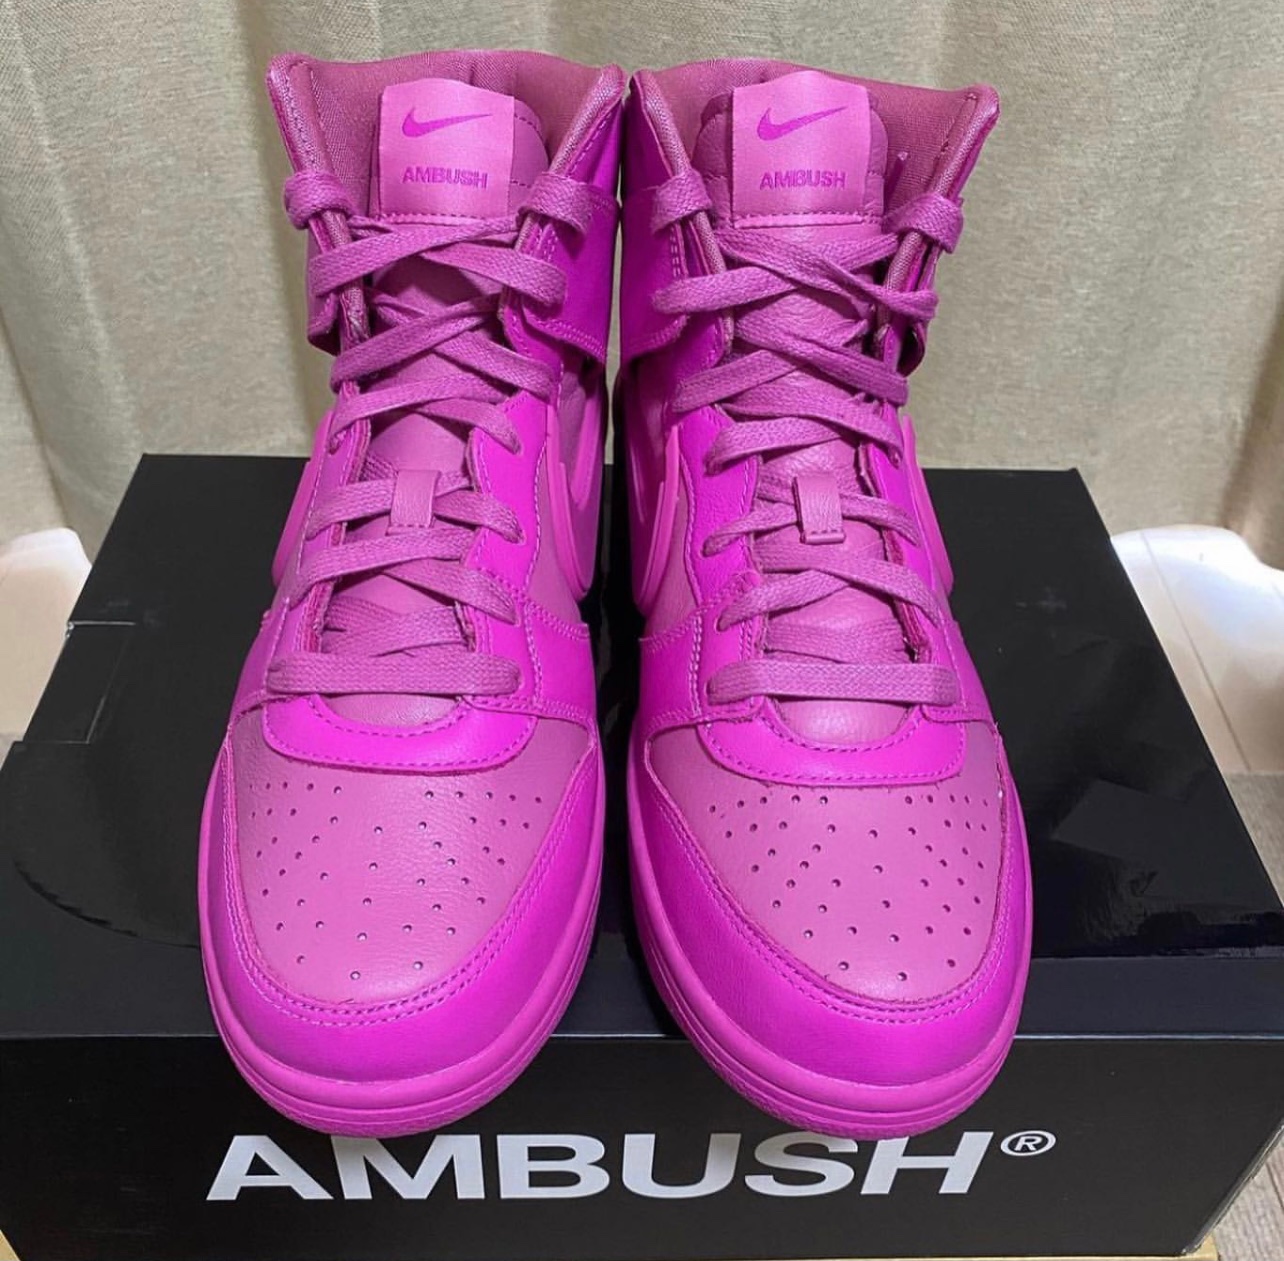 AMBUSH × Nike Dunk Hi “Pink Fuchsia” (アンブッシュ × ナイキ ダンク ハイ “ピンク”)